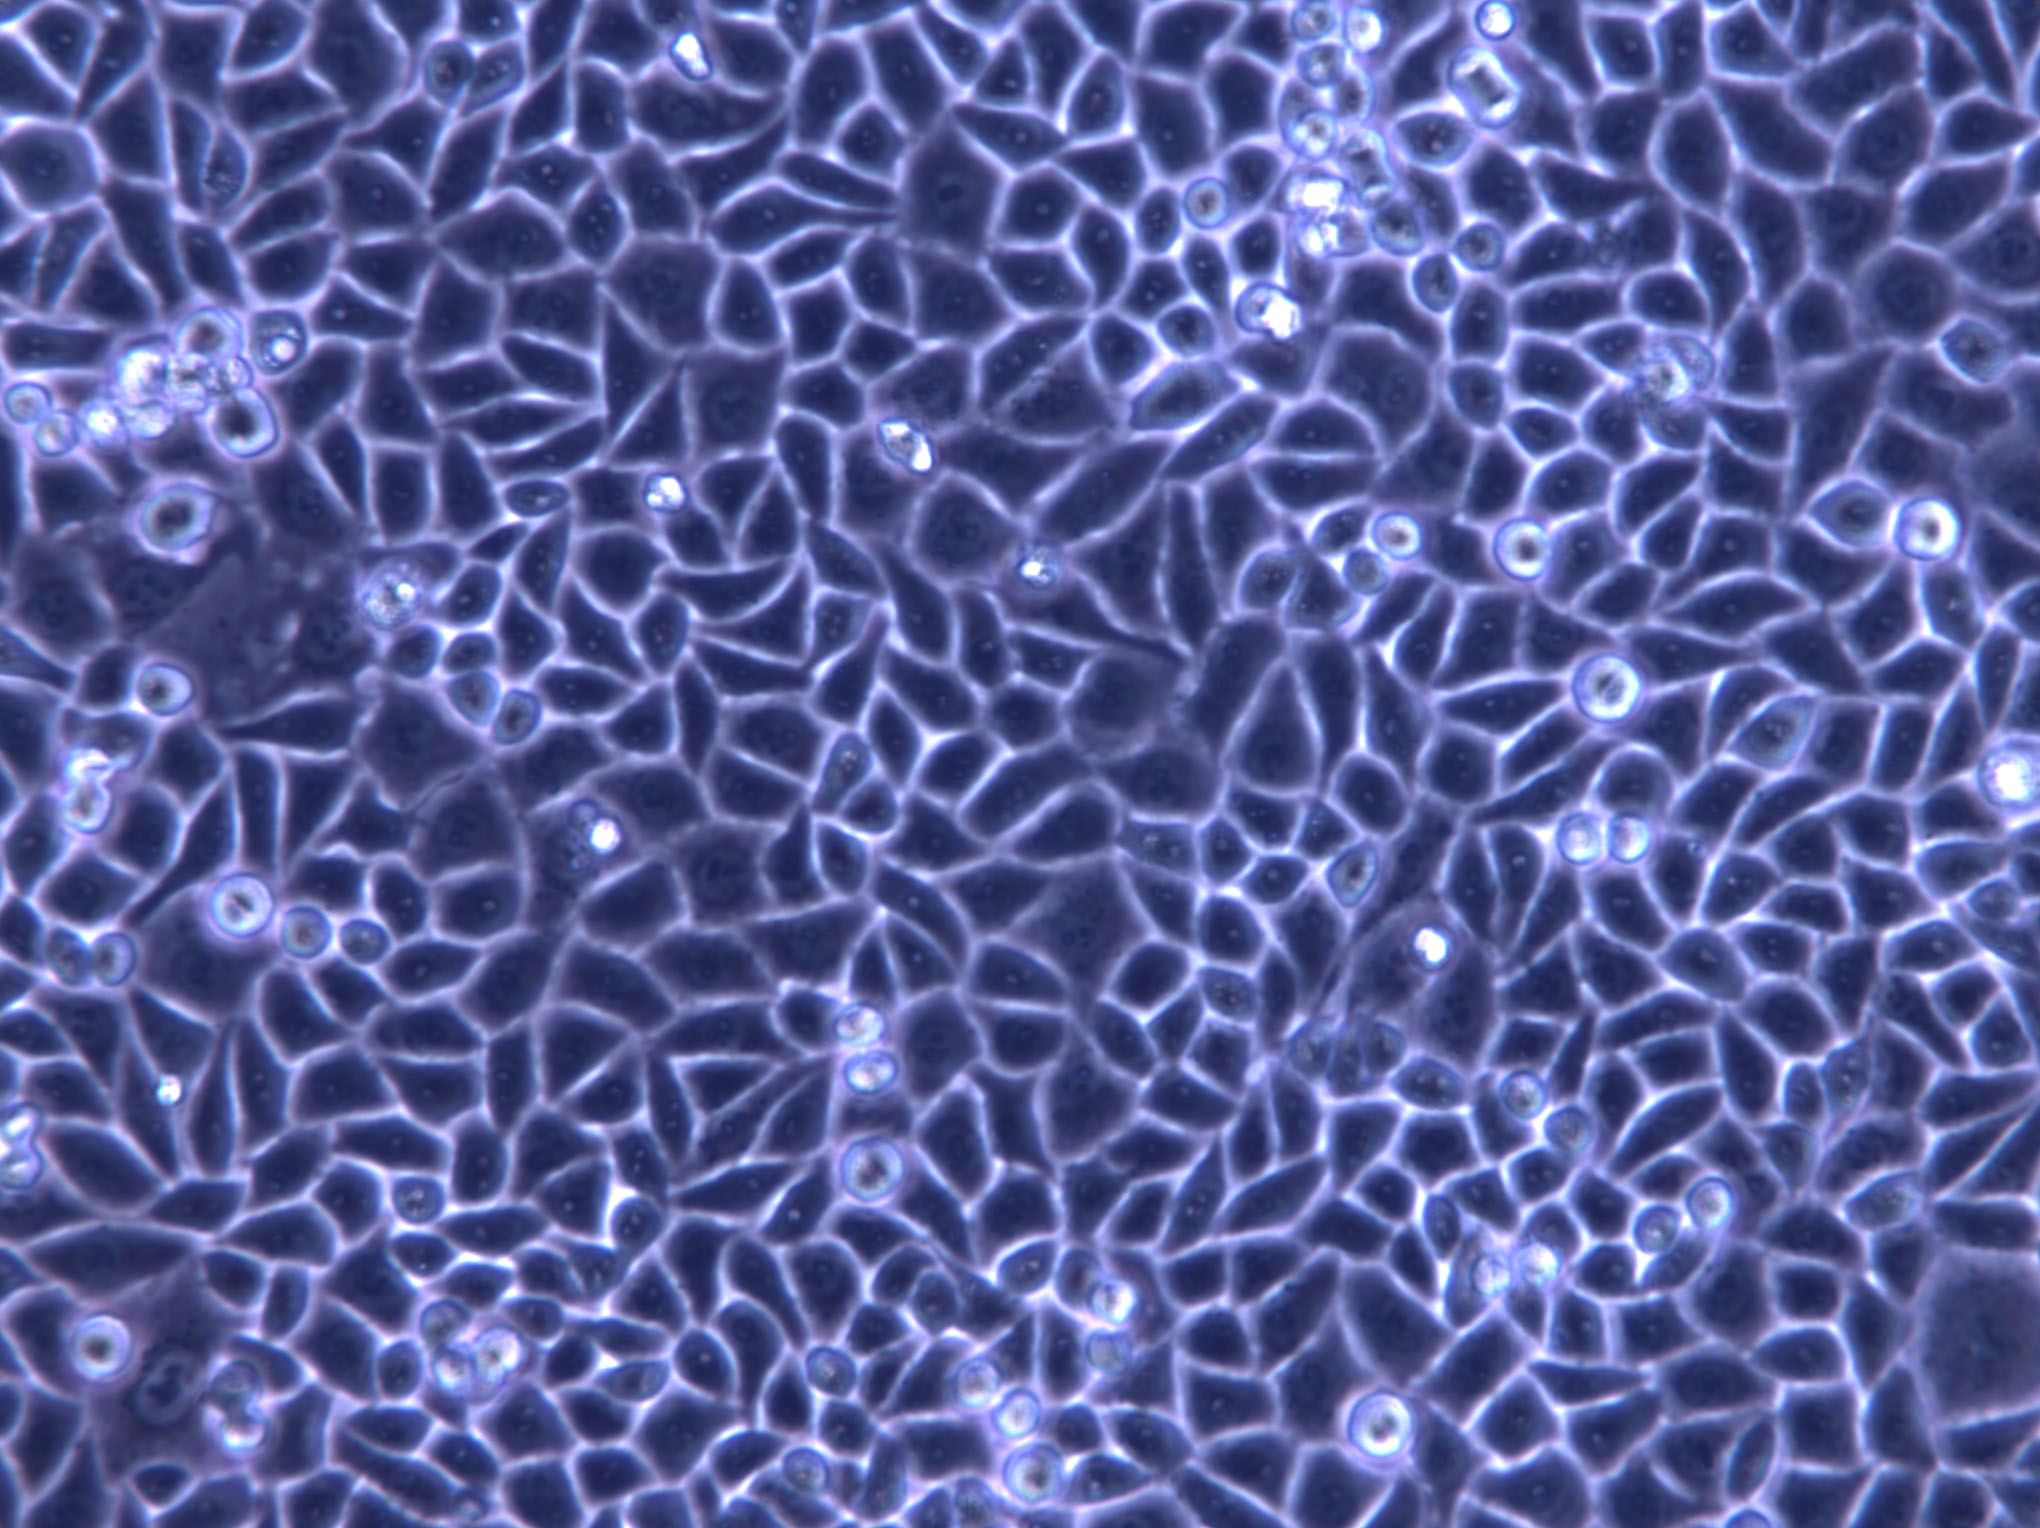 QG-56 Cell|人肺扁平上皮癌细胞